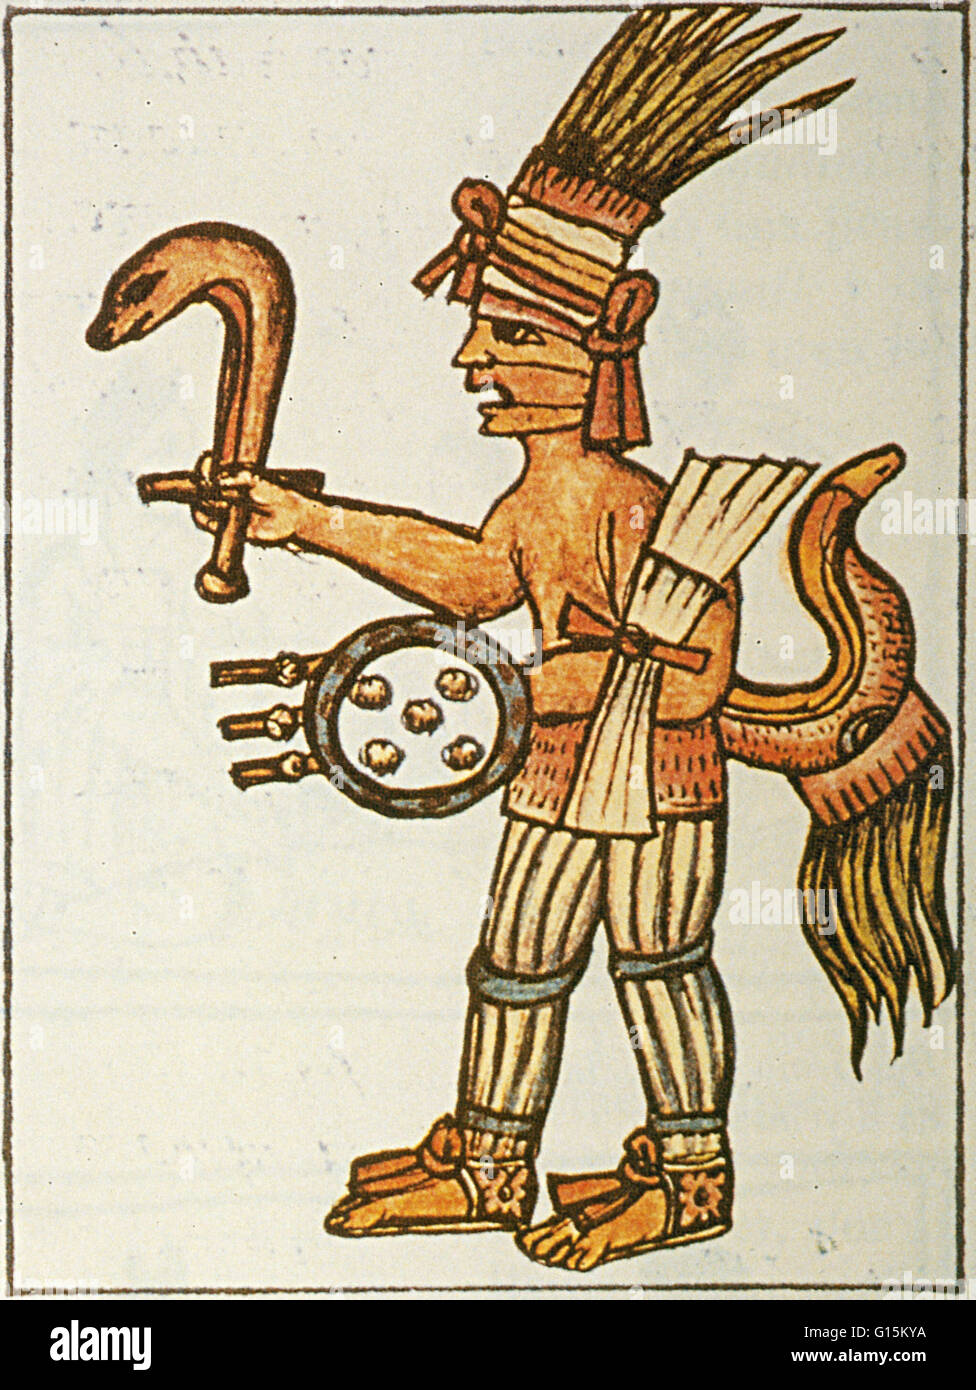 Religión azteca fotografías e imágenes de alta resolución - Alamy